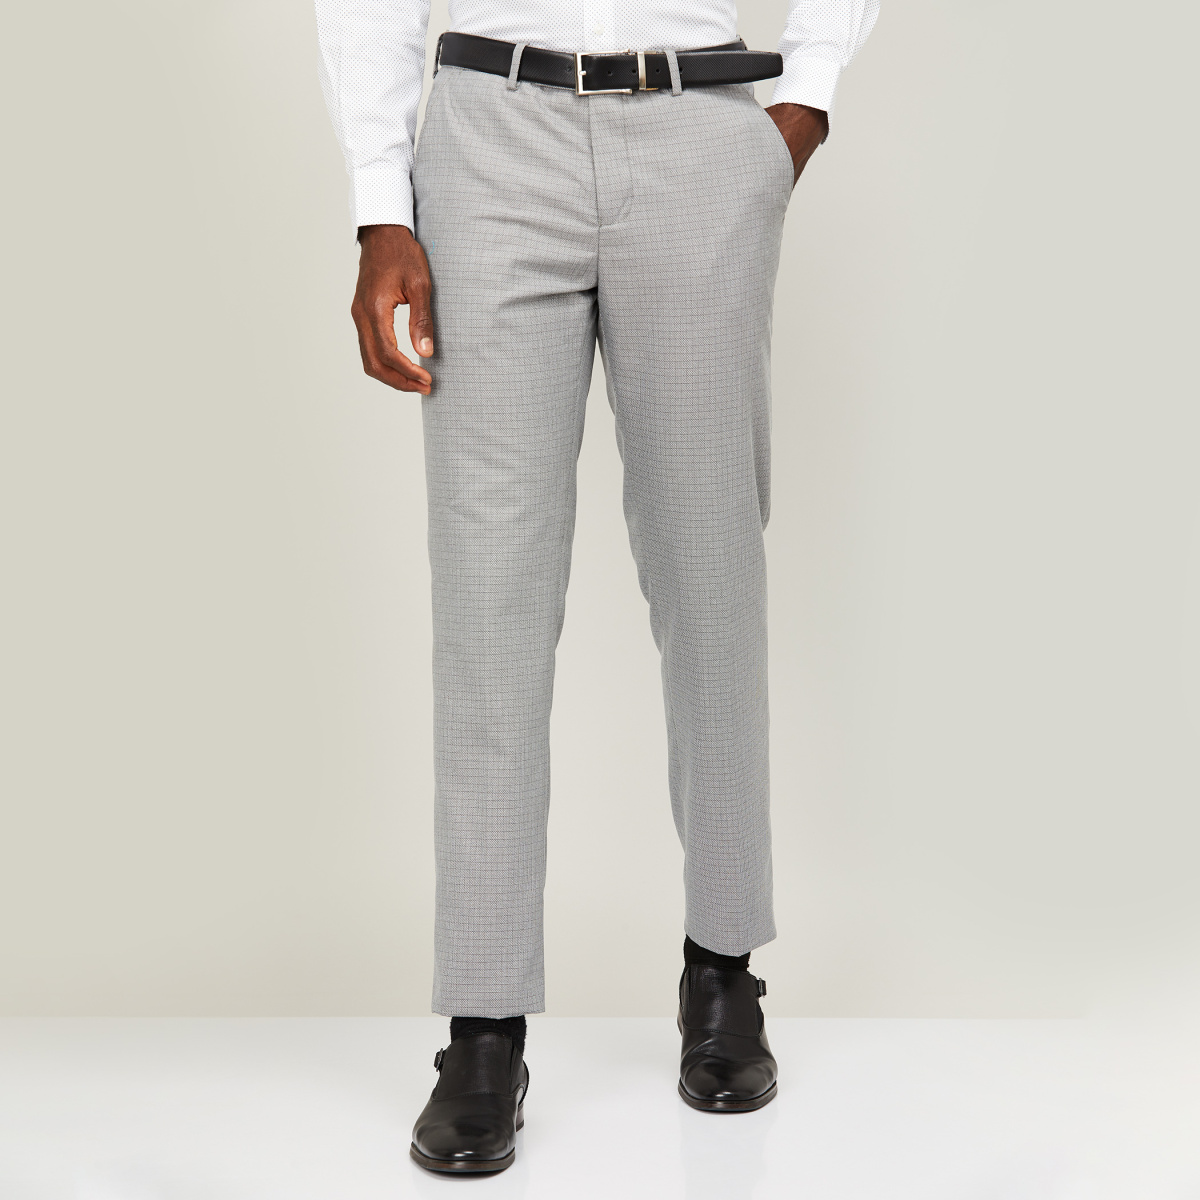 mens grey suit trousers